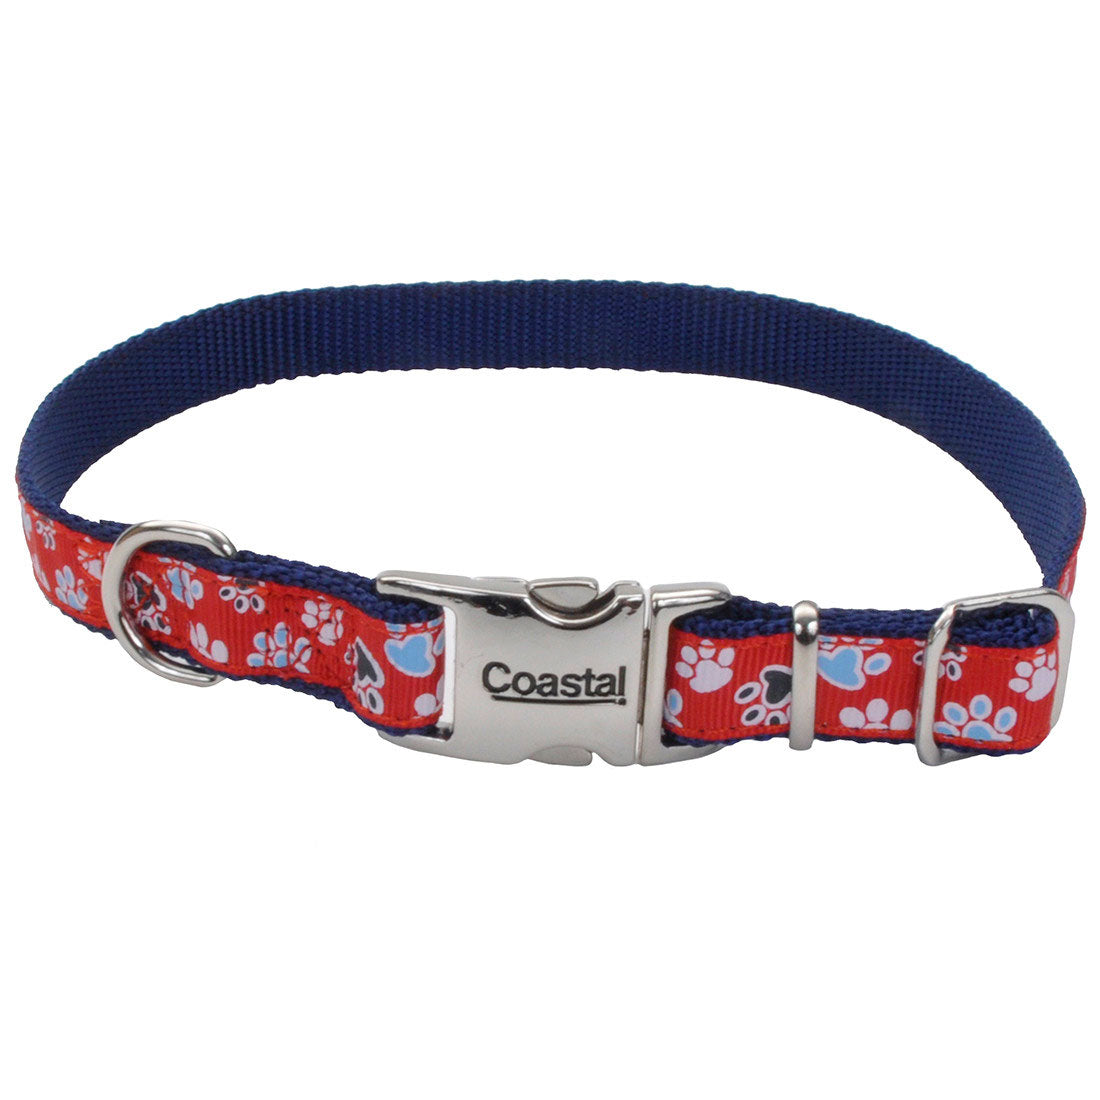 Coastal Ribbon Adjustable Dog Collar with Metal Clip Green Paw & Bone S/M